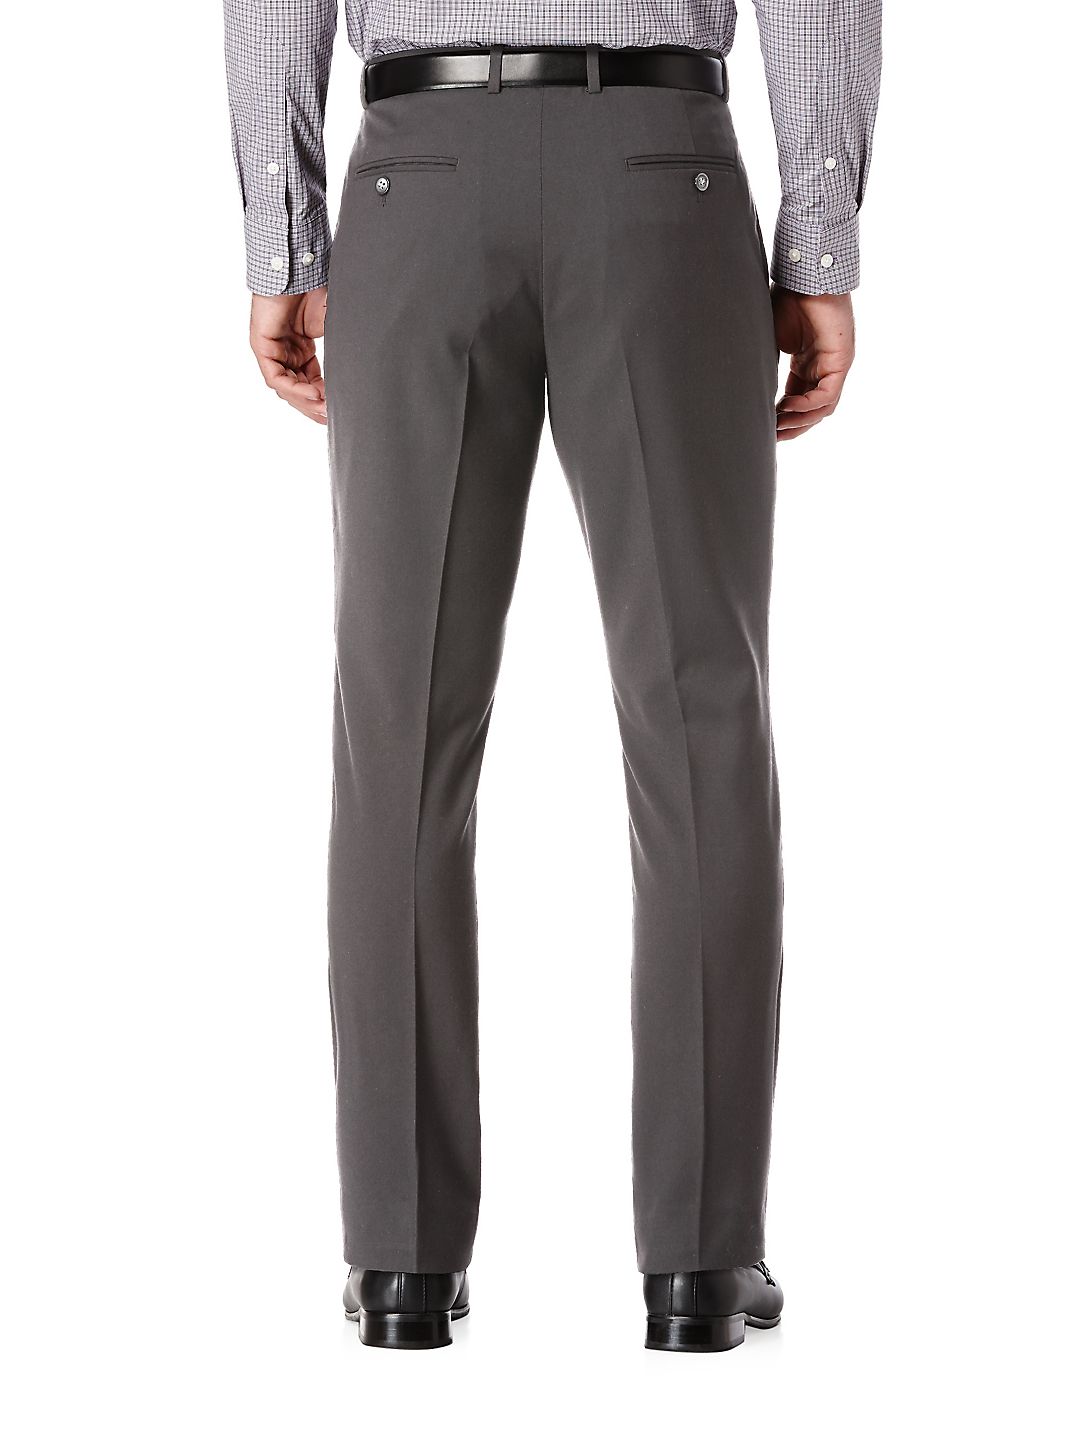 Perry Ellis BLACK Men's Slim-Fit Dress Pants, US 34x32 - Walmart.com